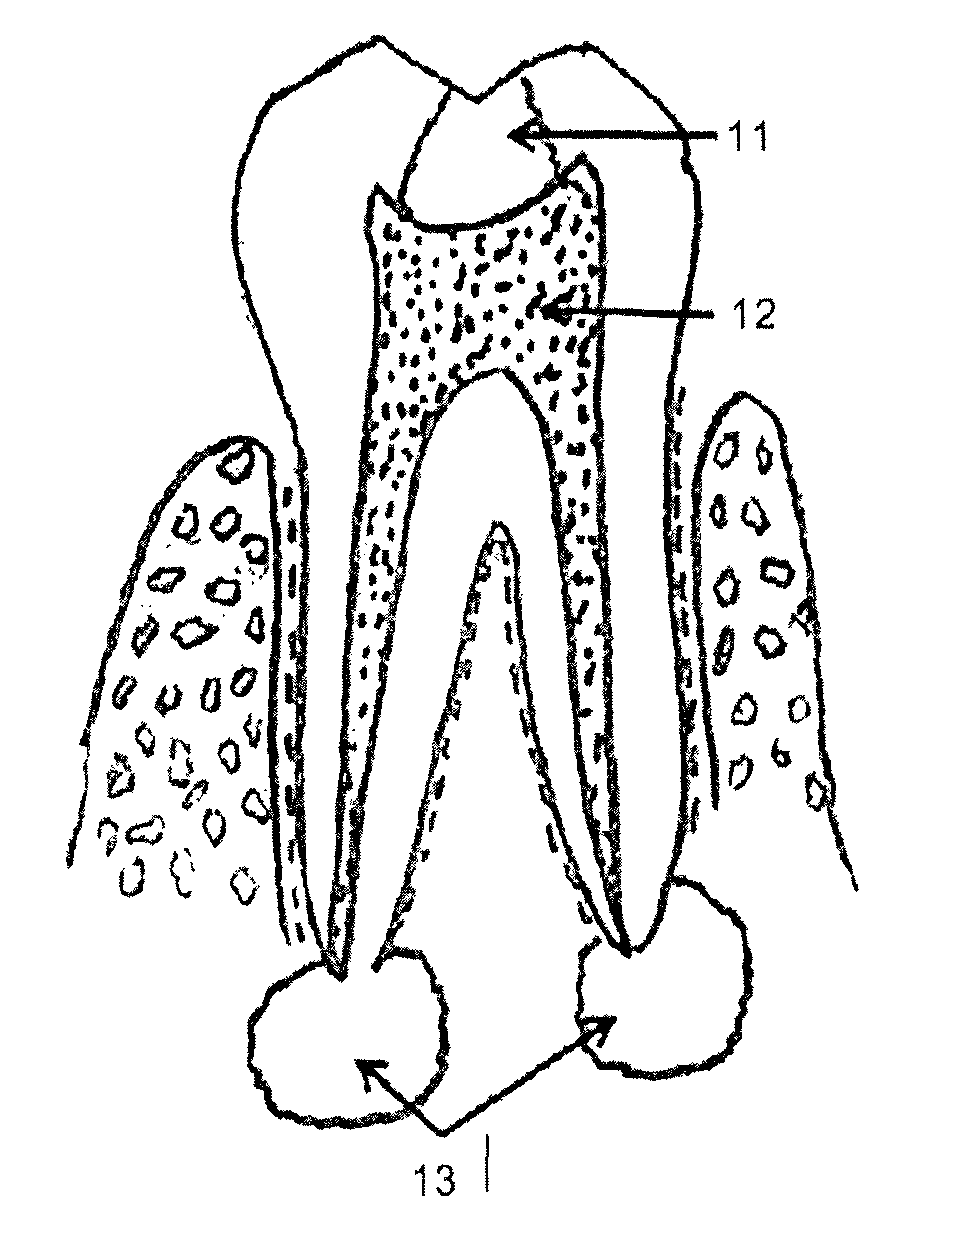 Sealbio: a novel non-obturation regenerative technique of endodontic treatment